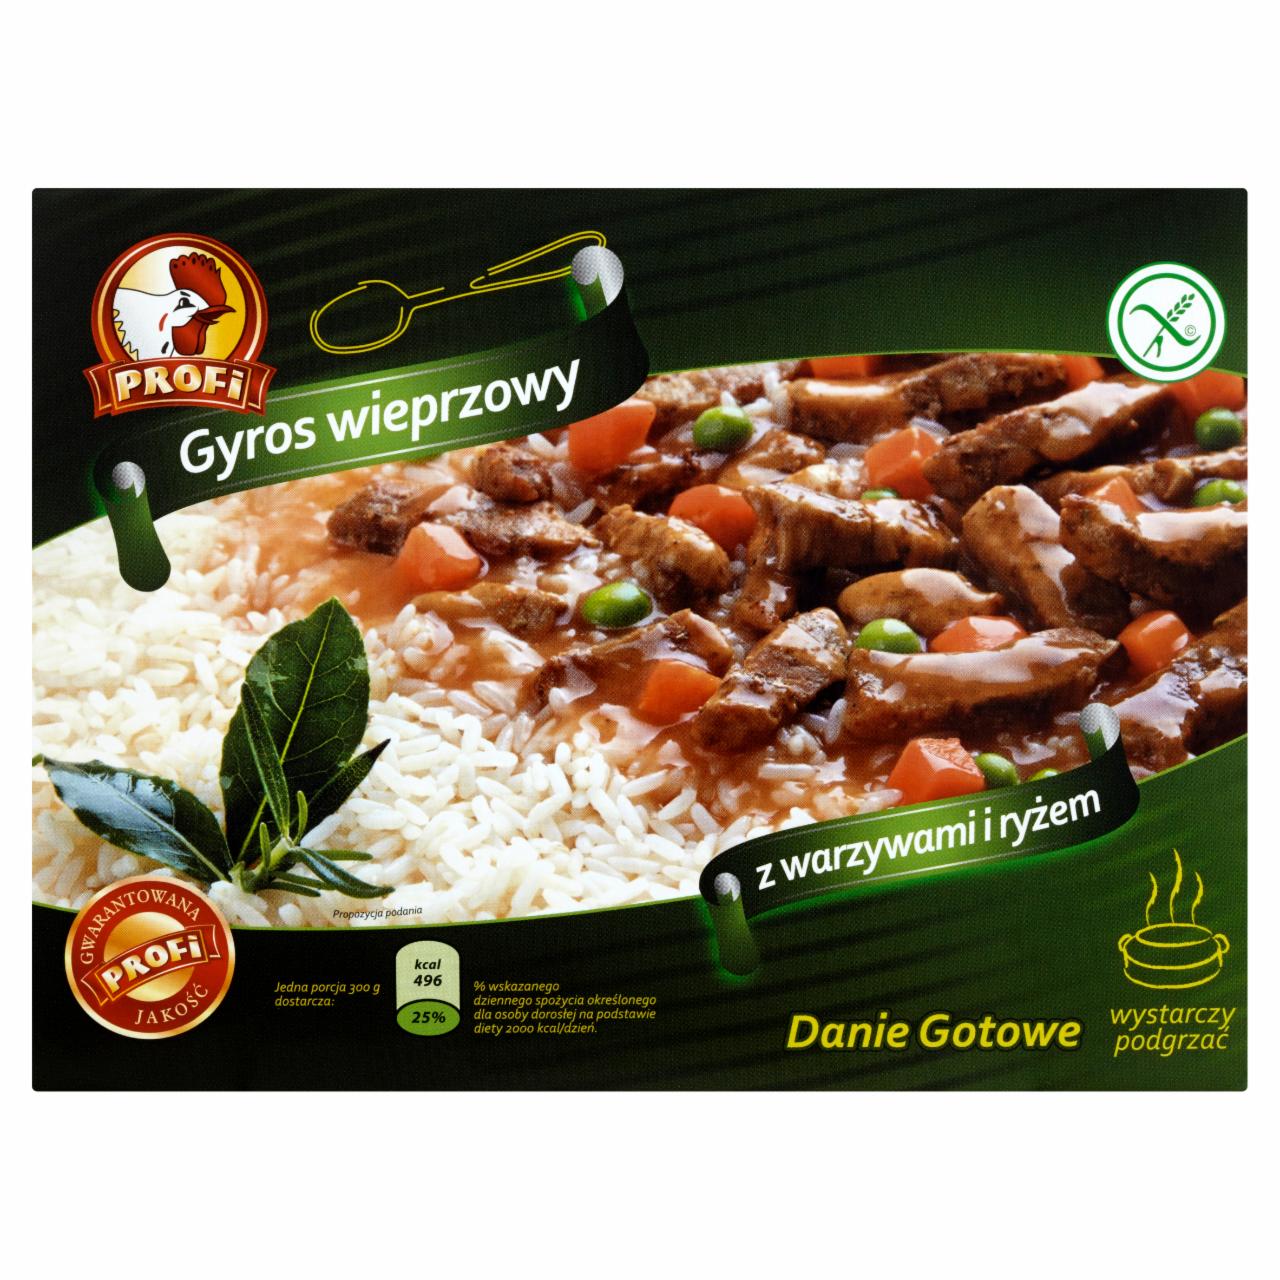 Photo - Profi Pork Gyros with Vegetables and Rice 300 g